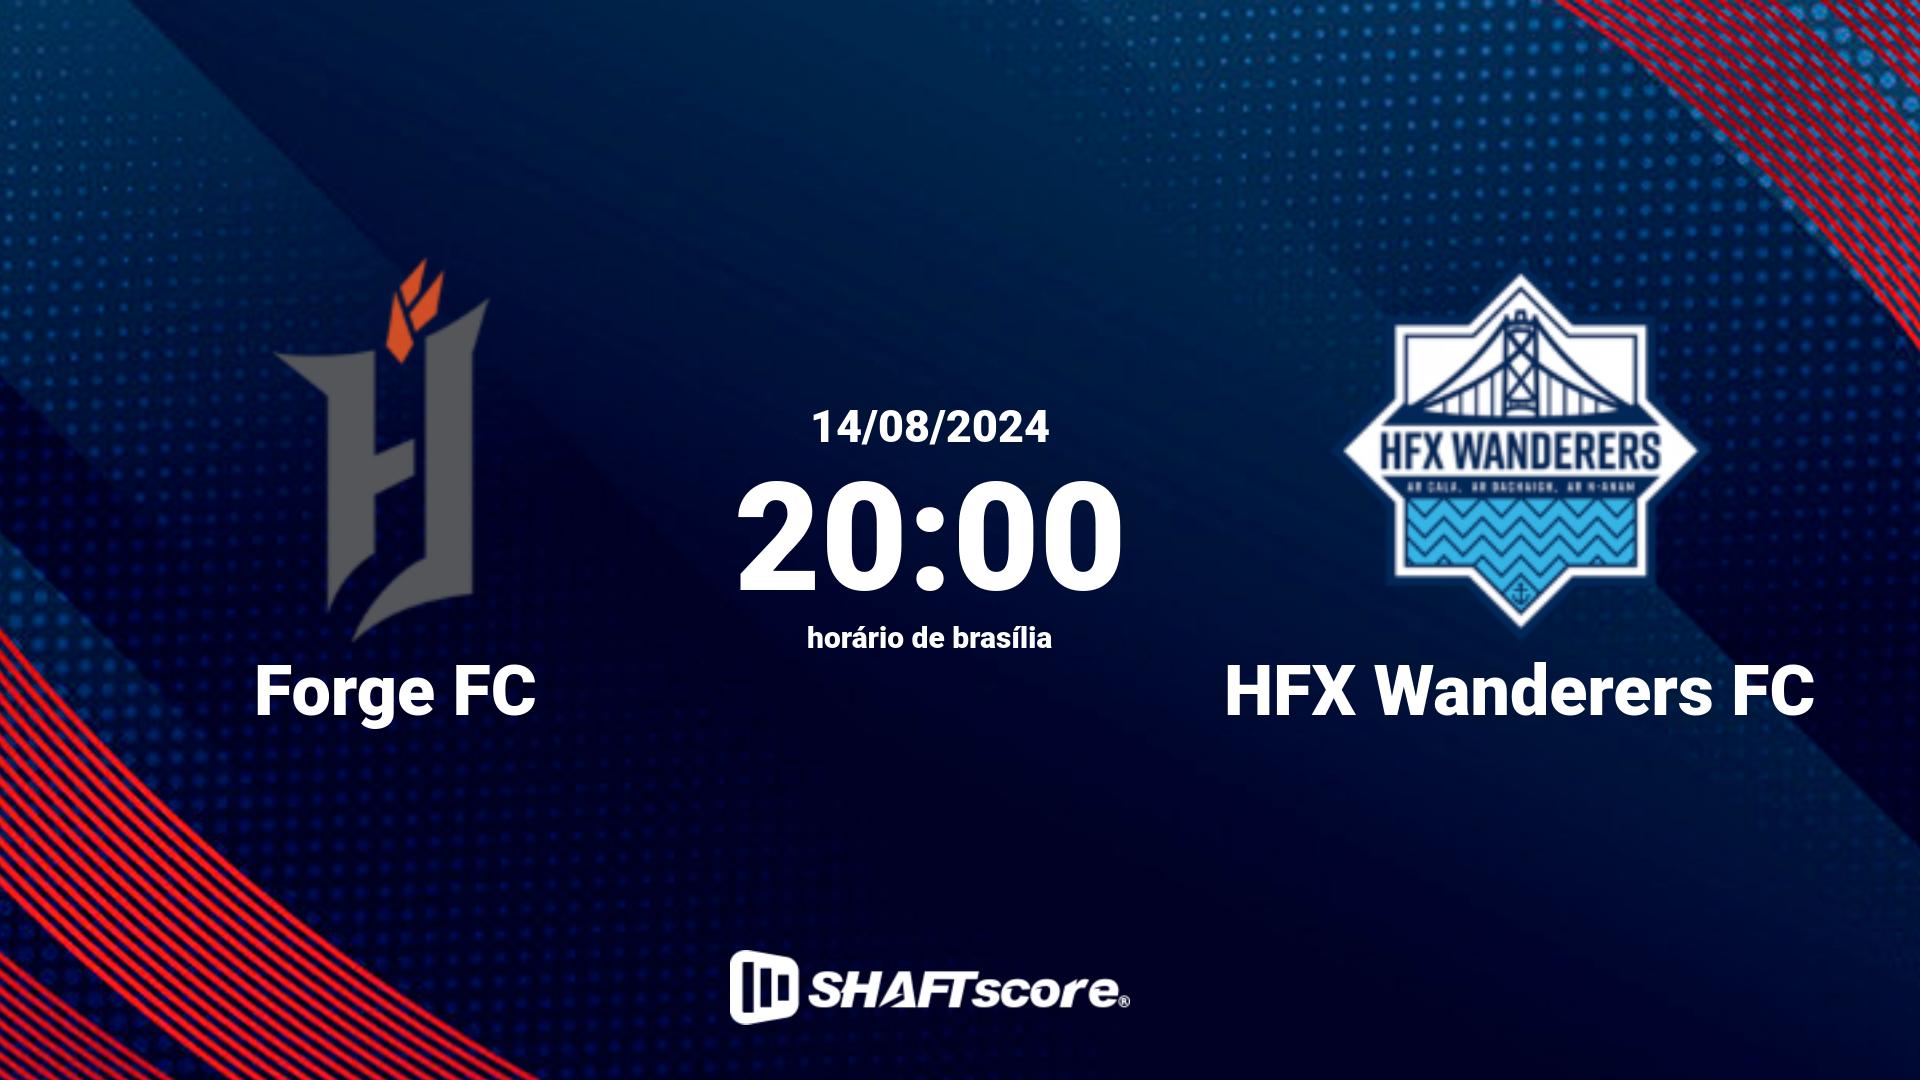 Estatísticas do jogo Forge FC vs HFX Wanderers FC 14.08 20:00